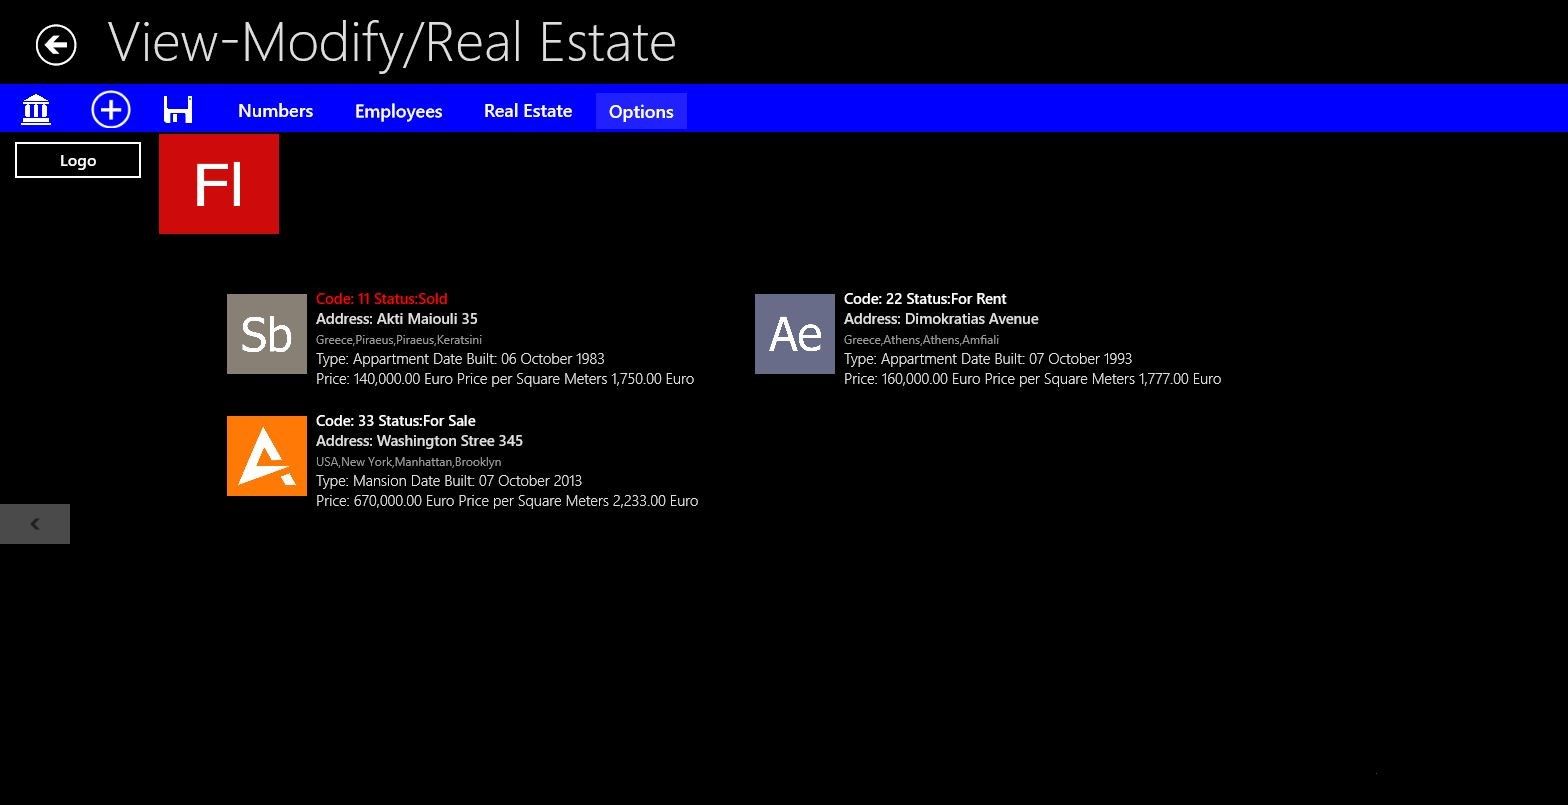 Companies Real Estates